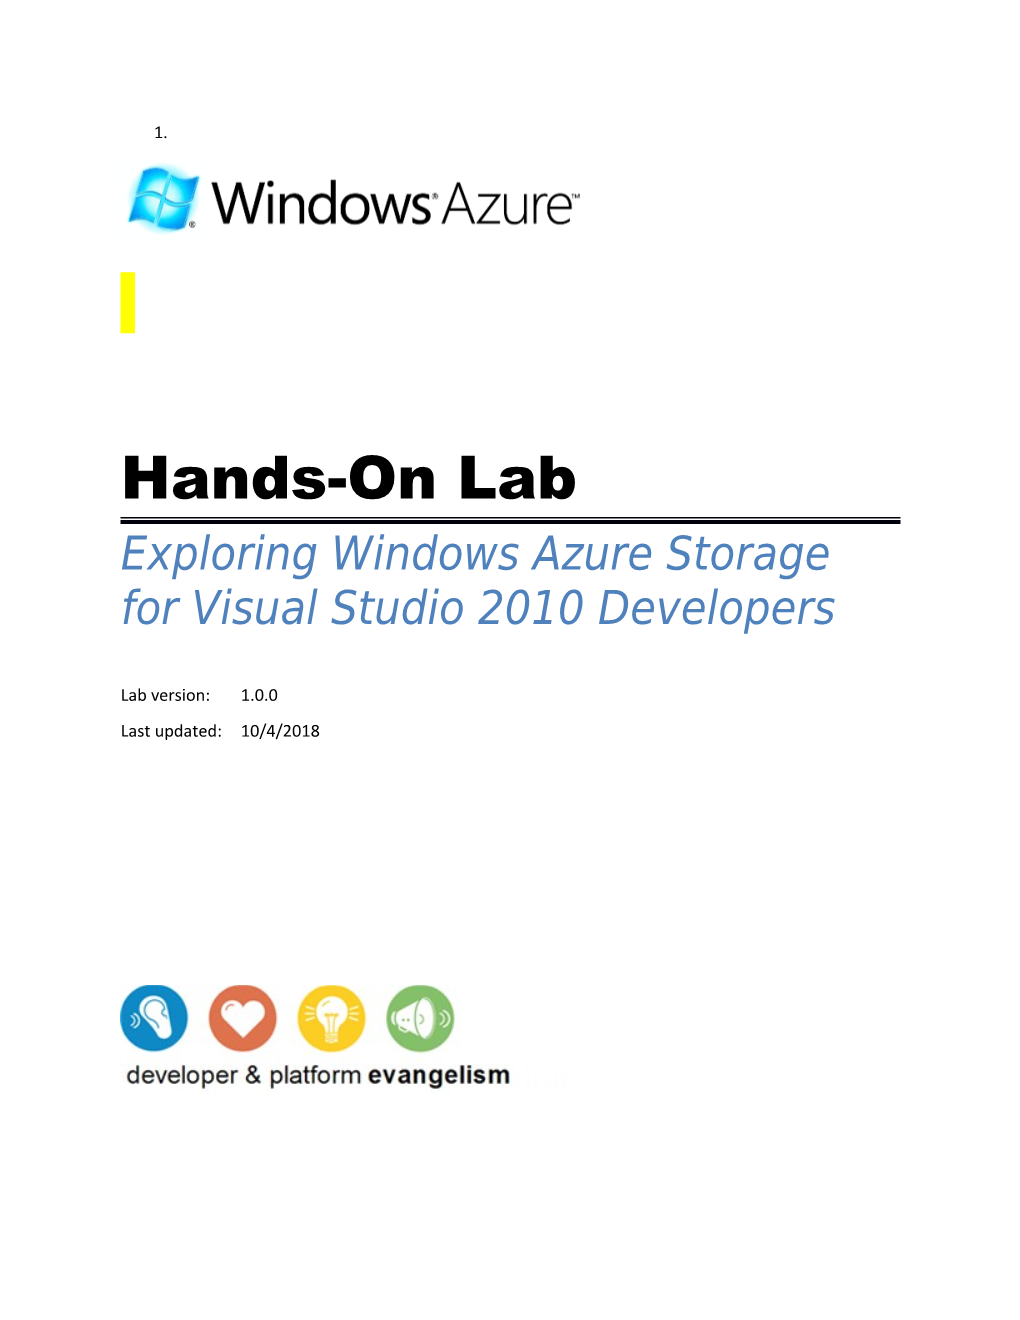 Exploring Windows Azure Storage for Visual Studio 2010 Developers